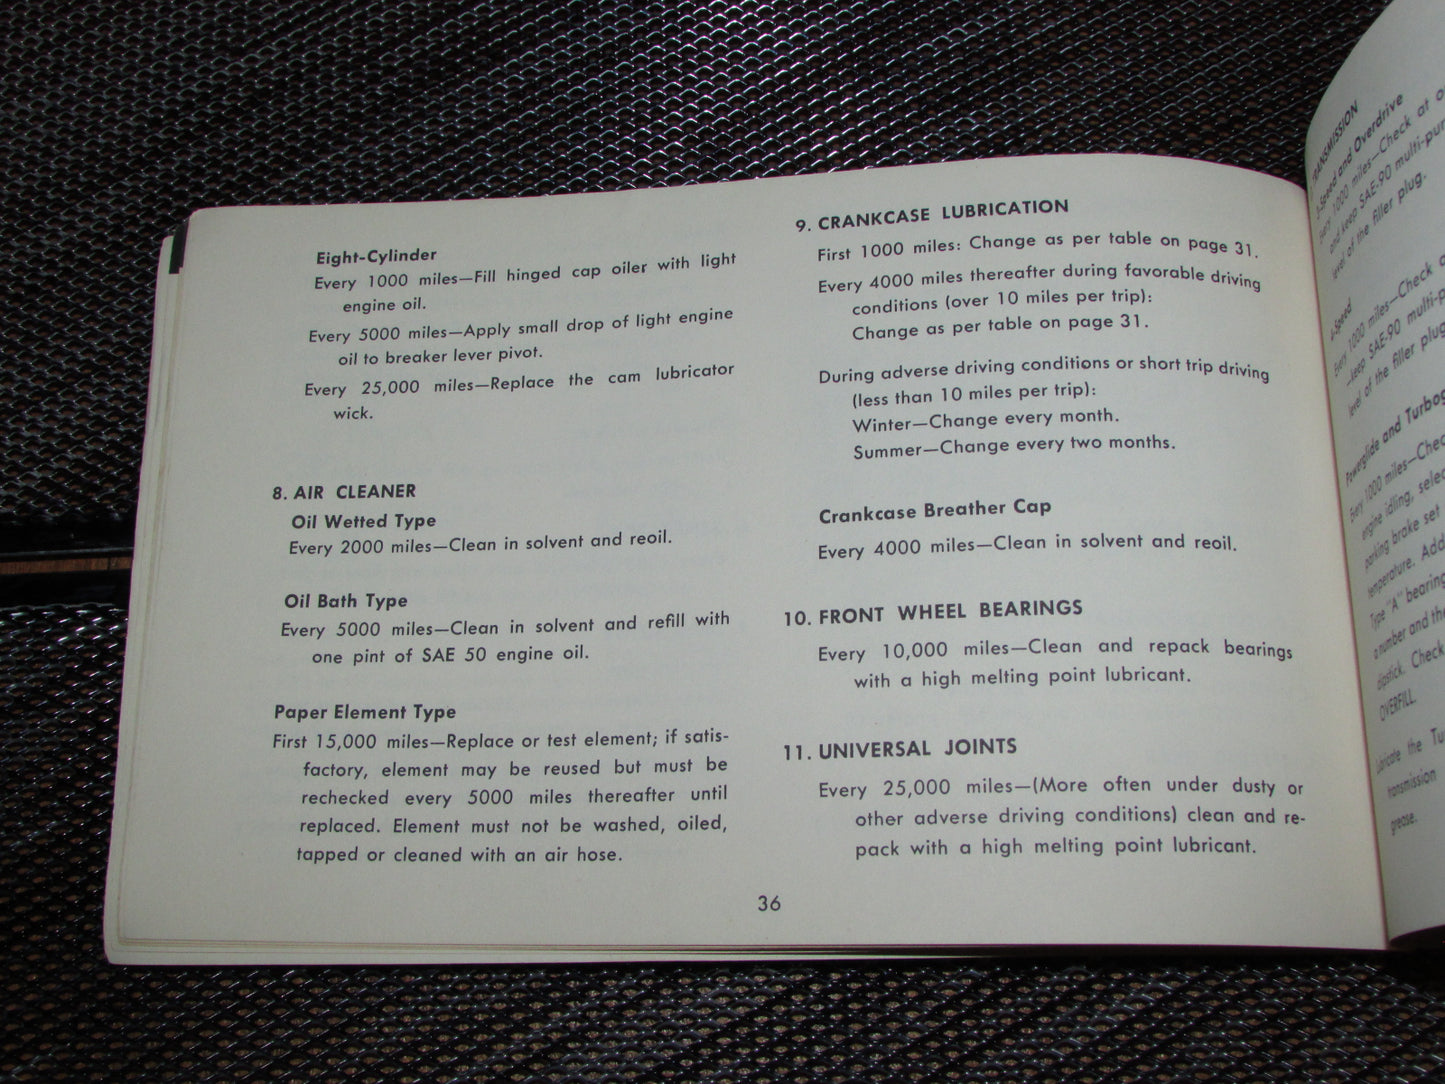 Chevrolet Passenger Car (1961) Owners Manual